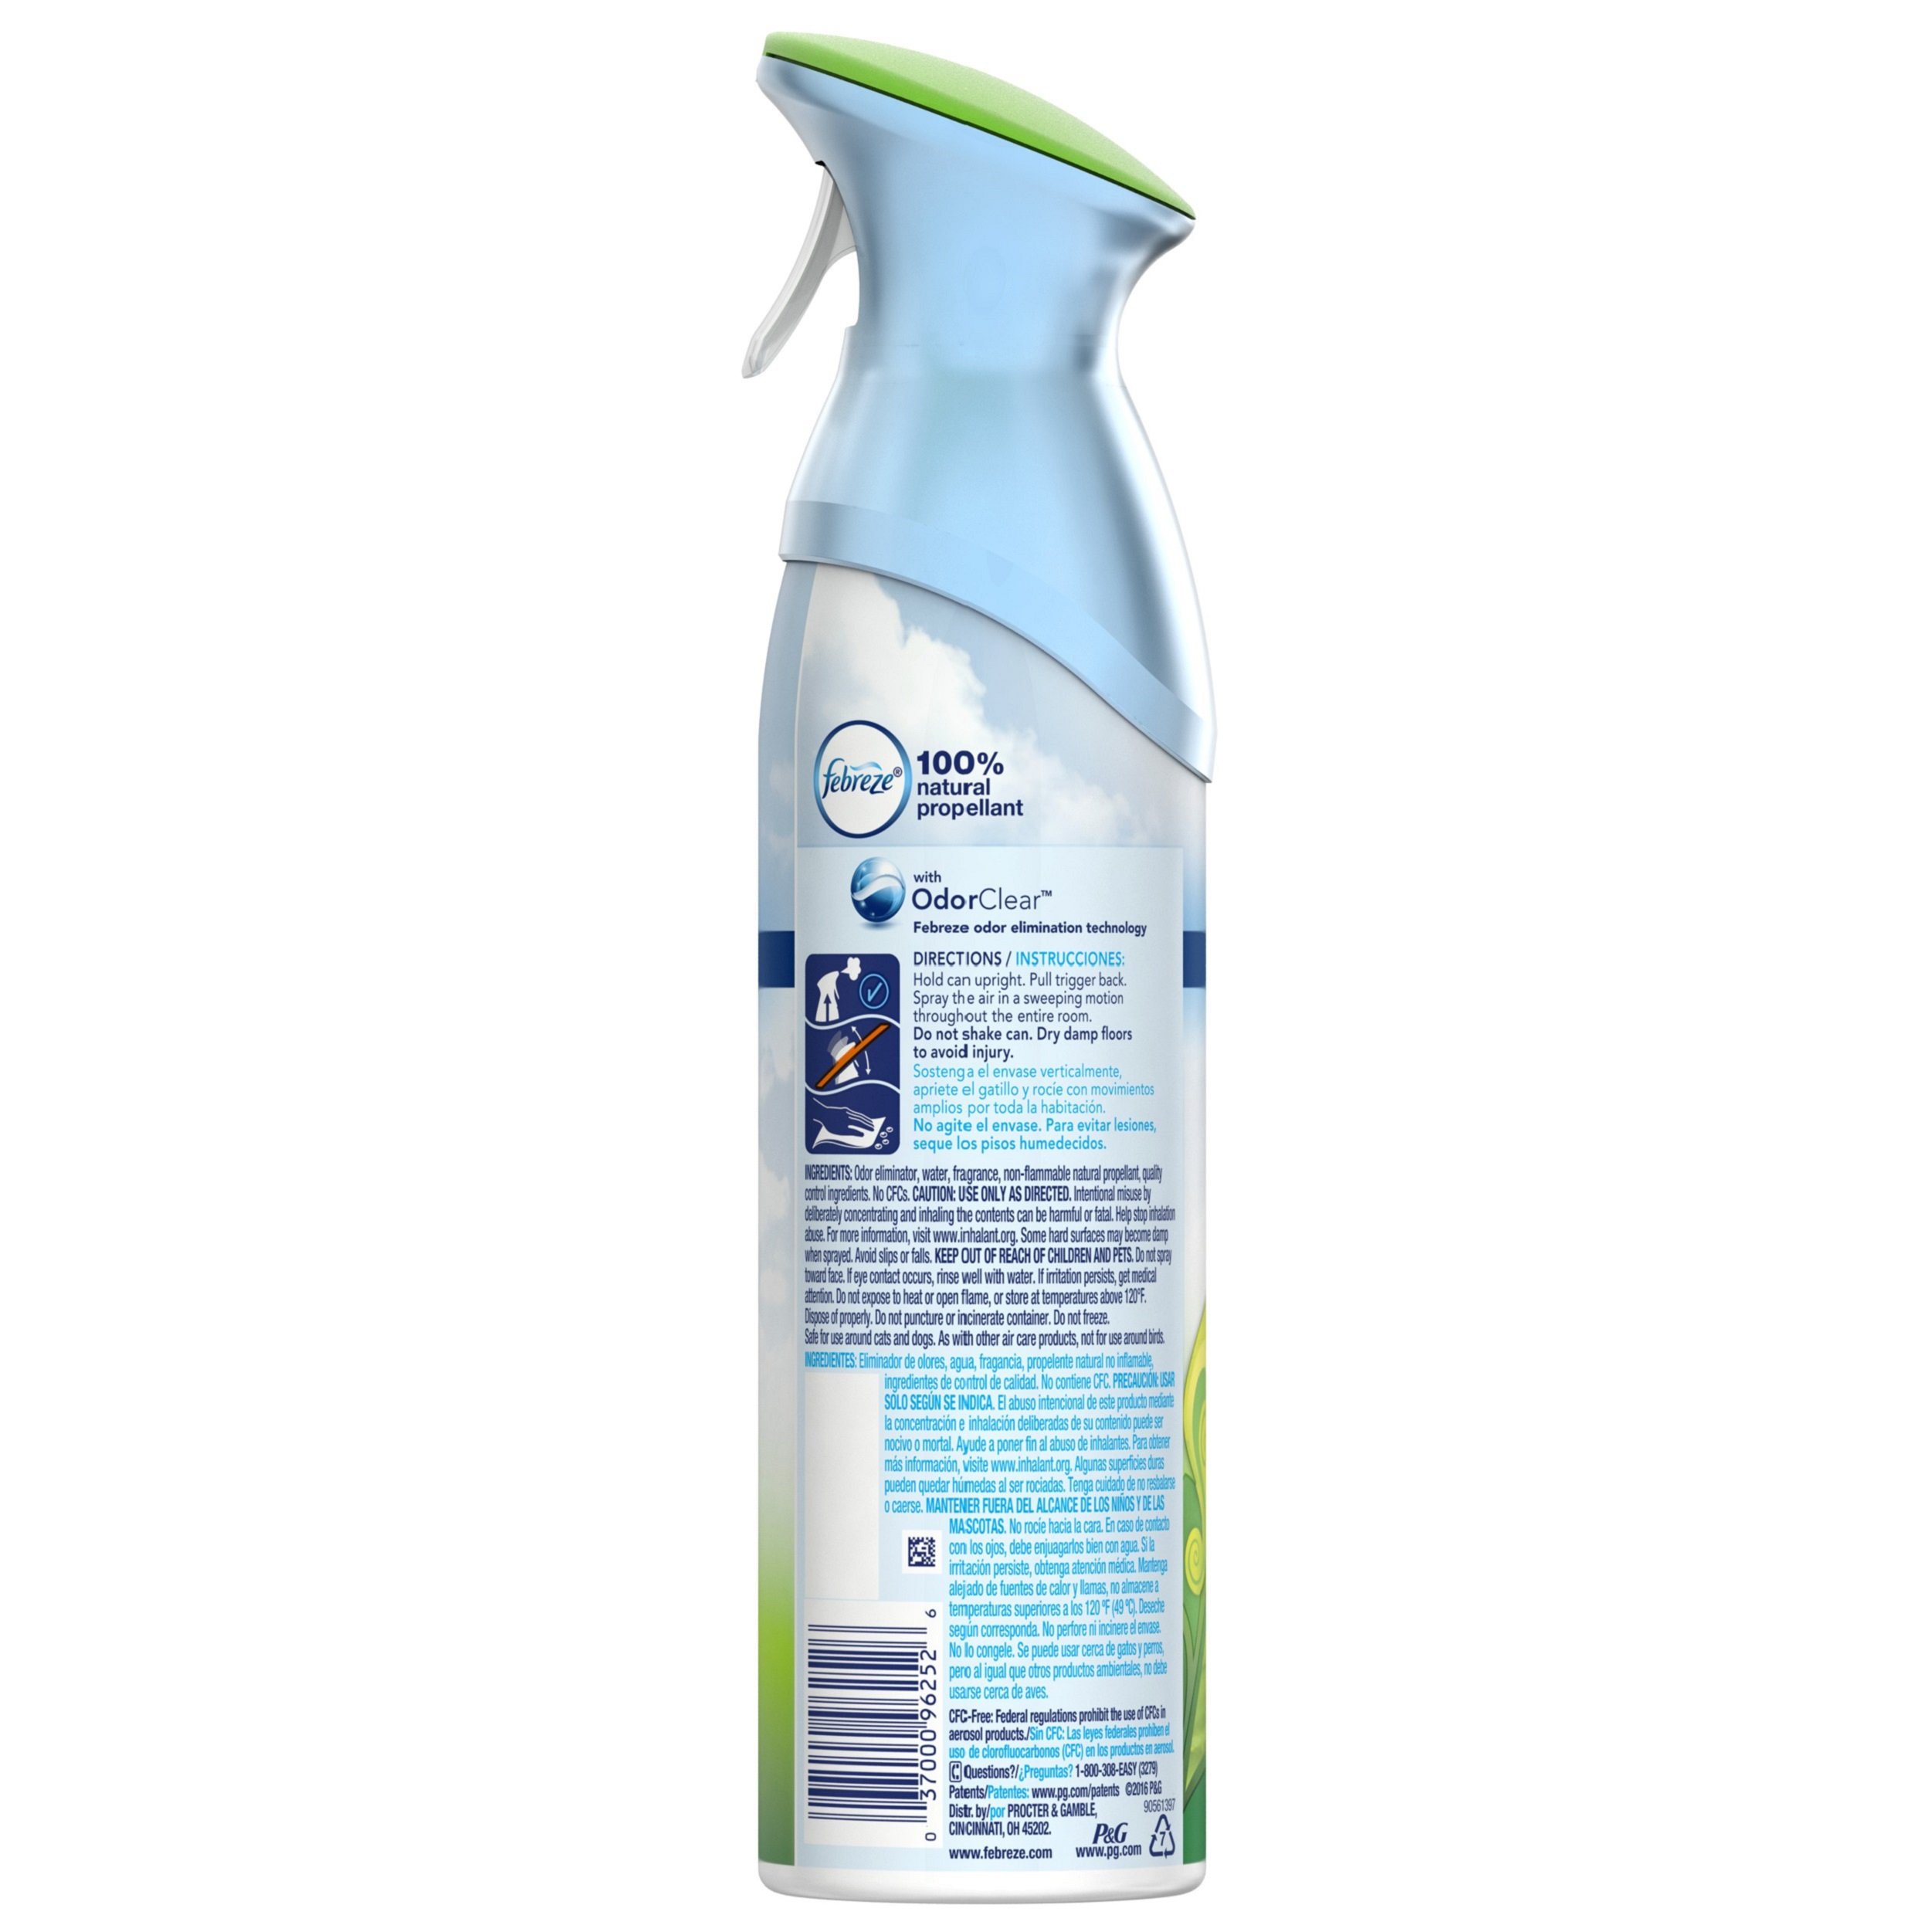 Febreze Air Freshener and Odor Eliminator Spray, Gain Original Scent, 8.8 Oz (Pack of 6)